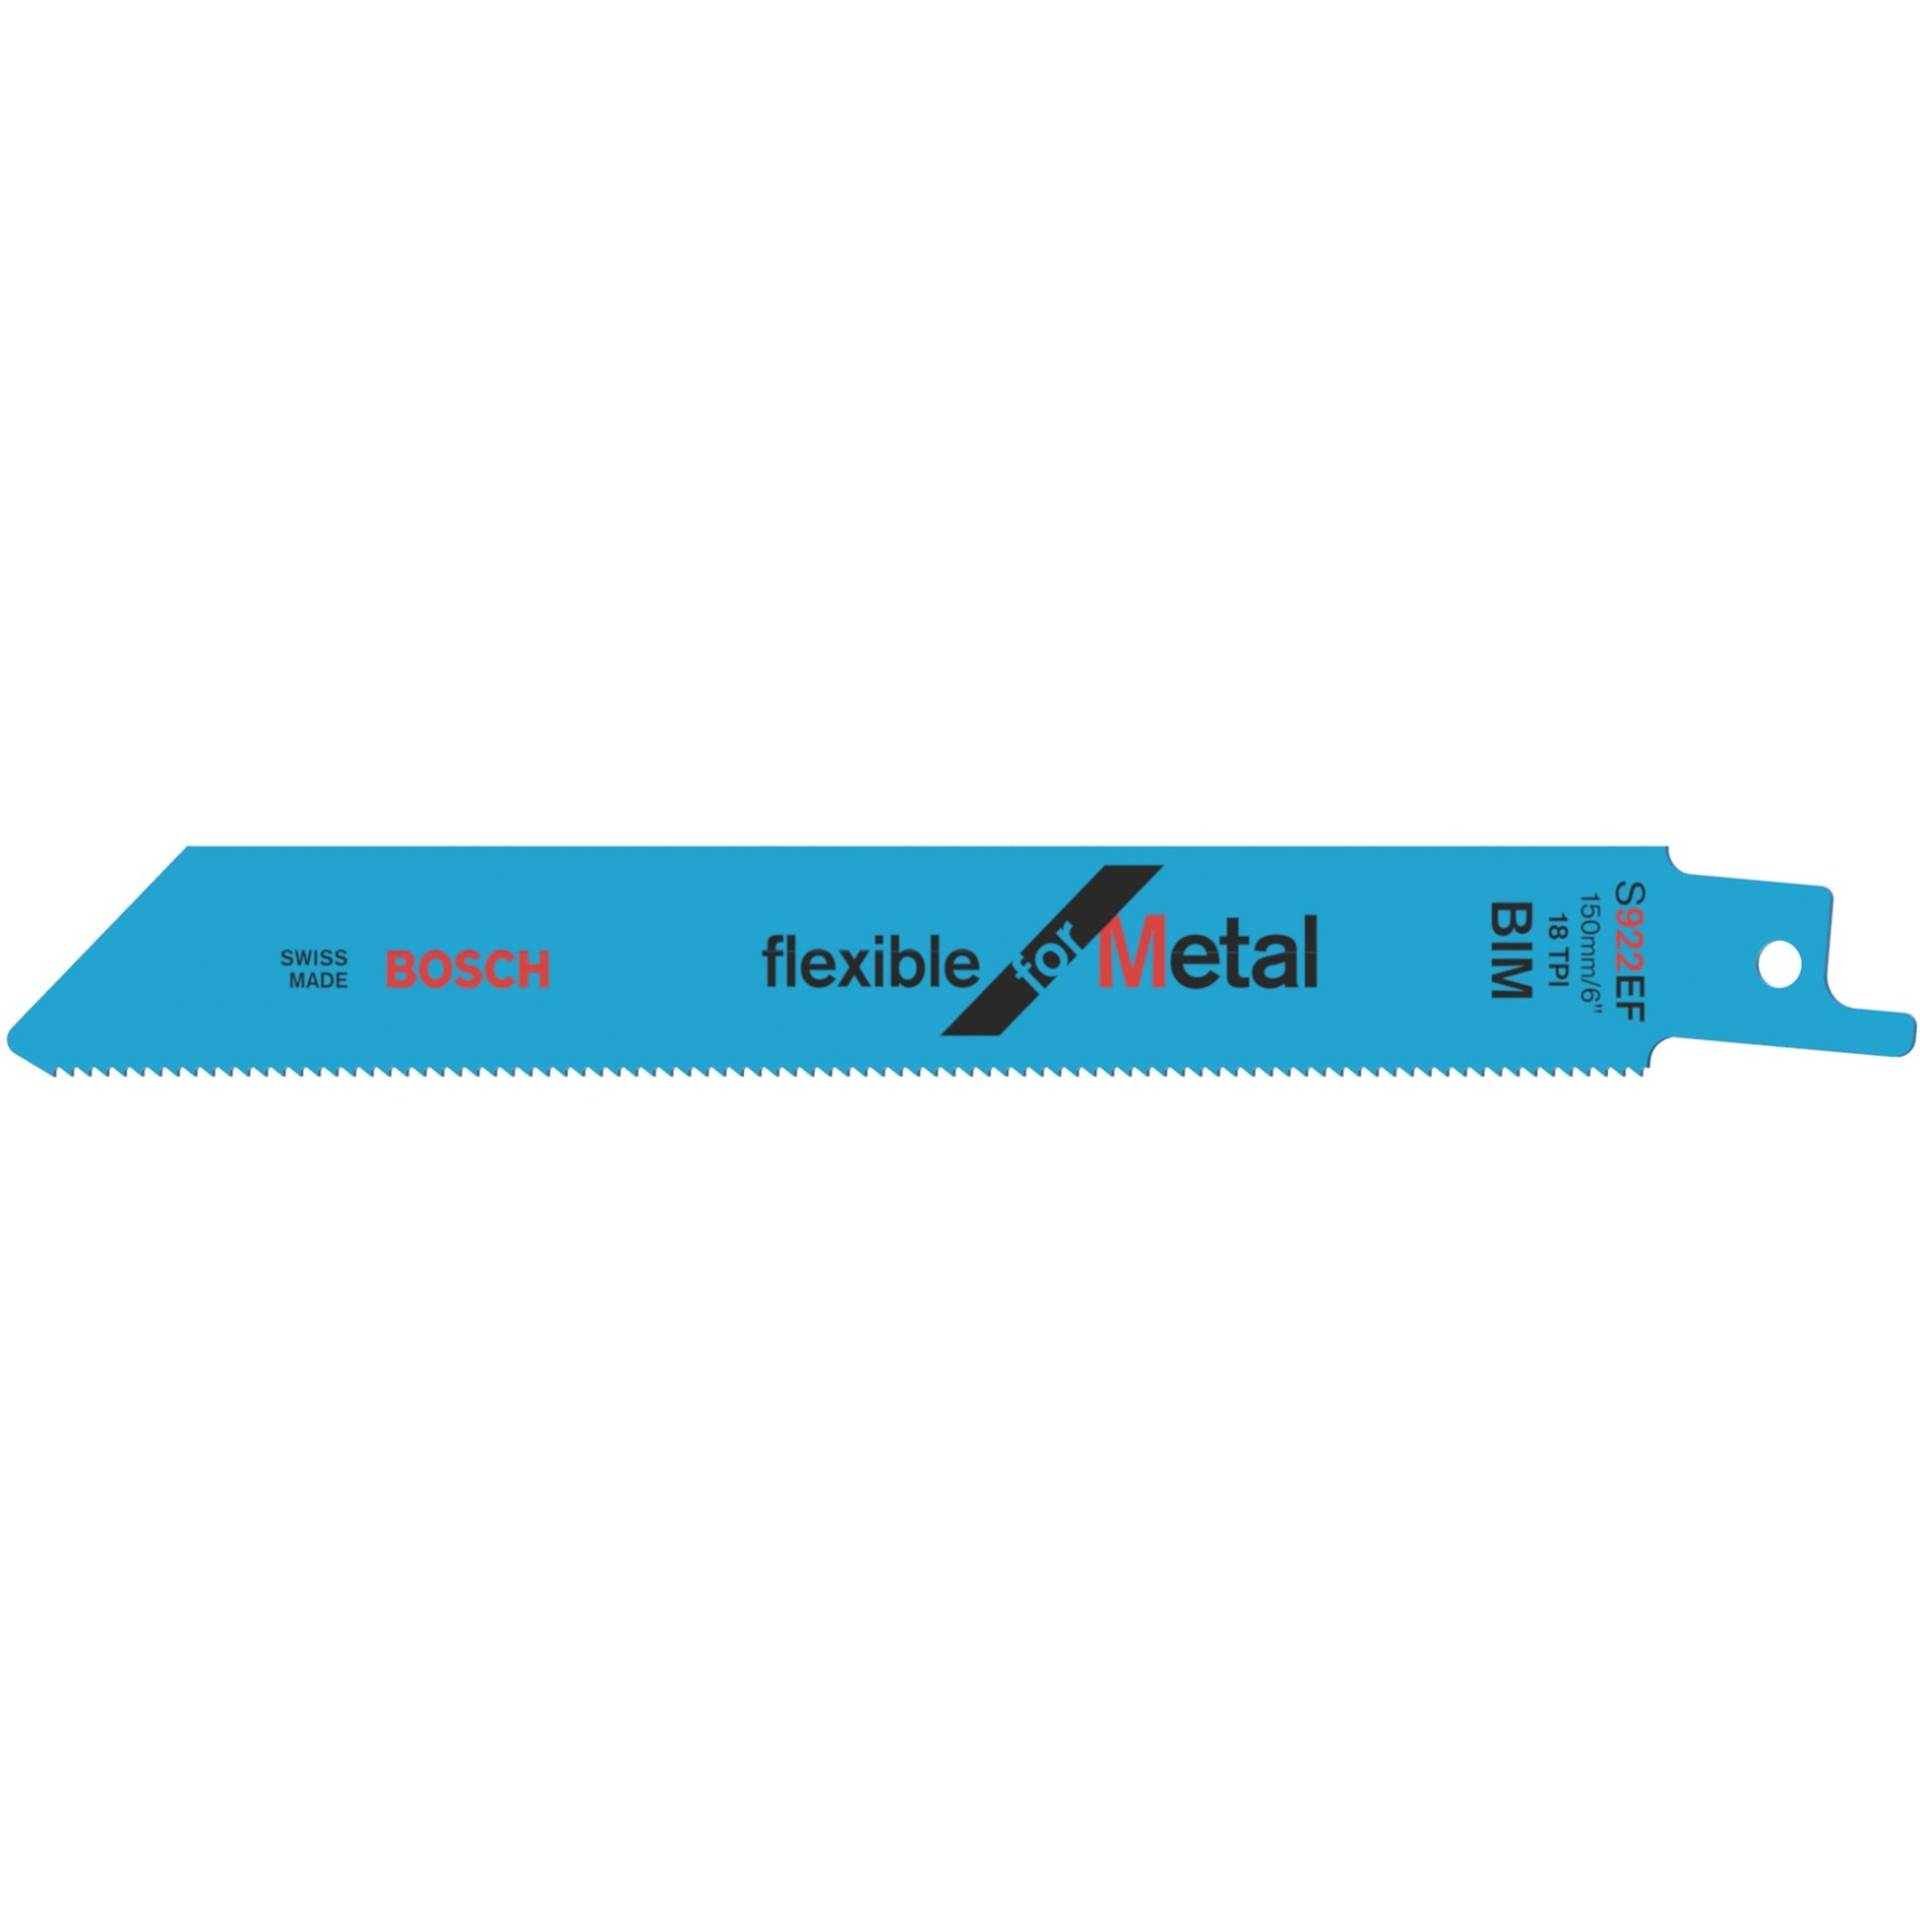 Säbelsägeblatt S 922 EF Flexible for Metal, 5 Stück von Bosch